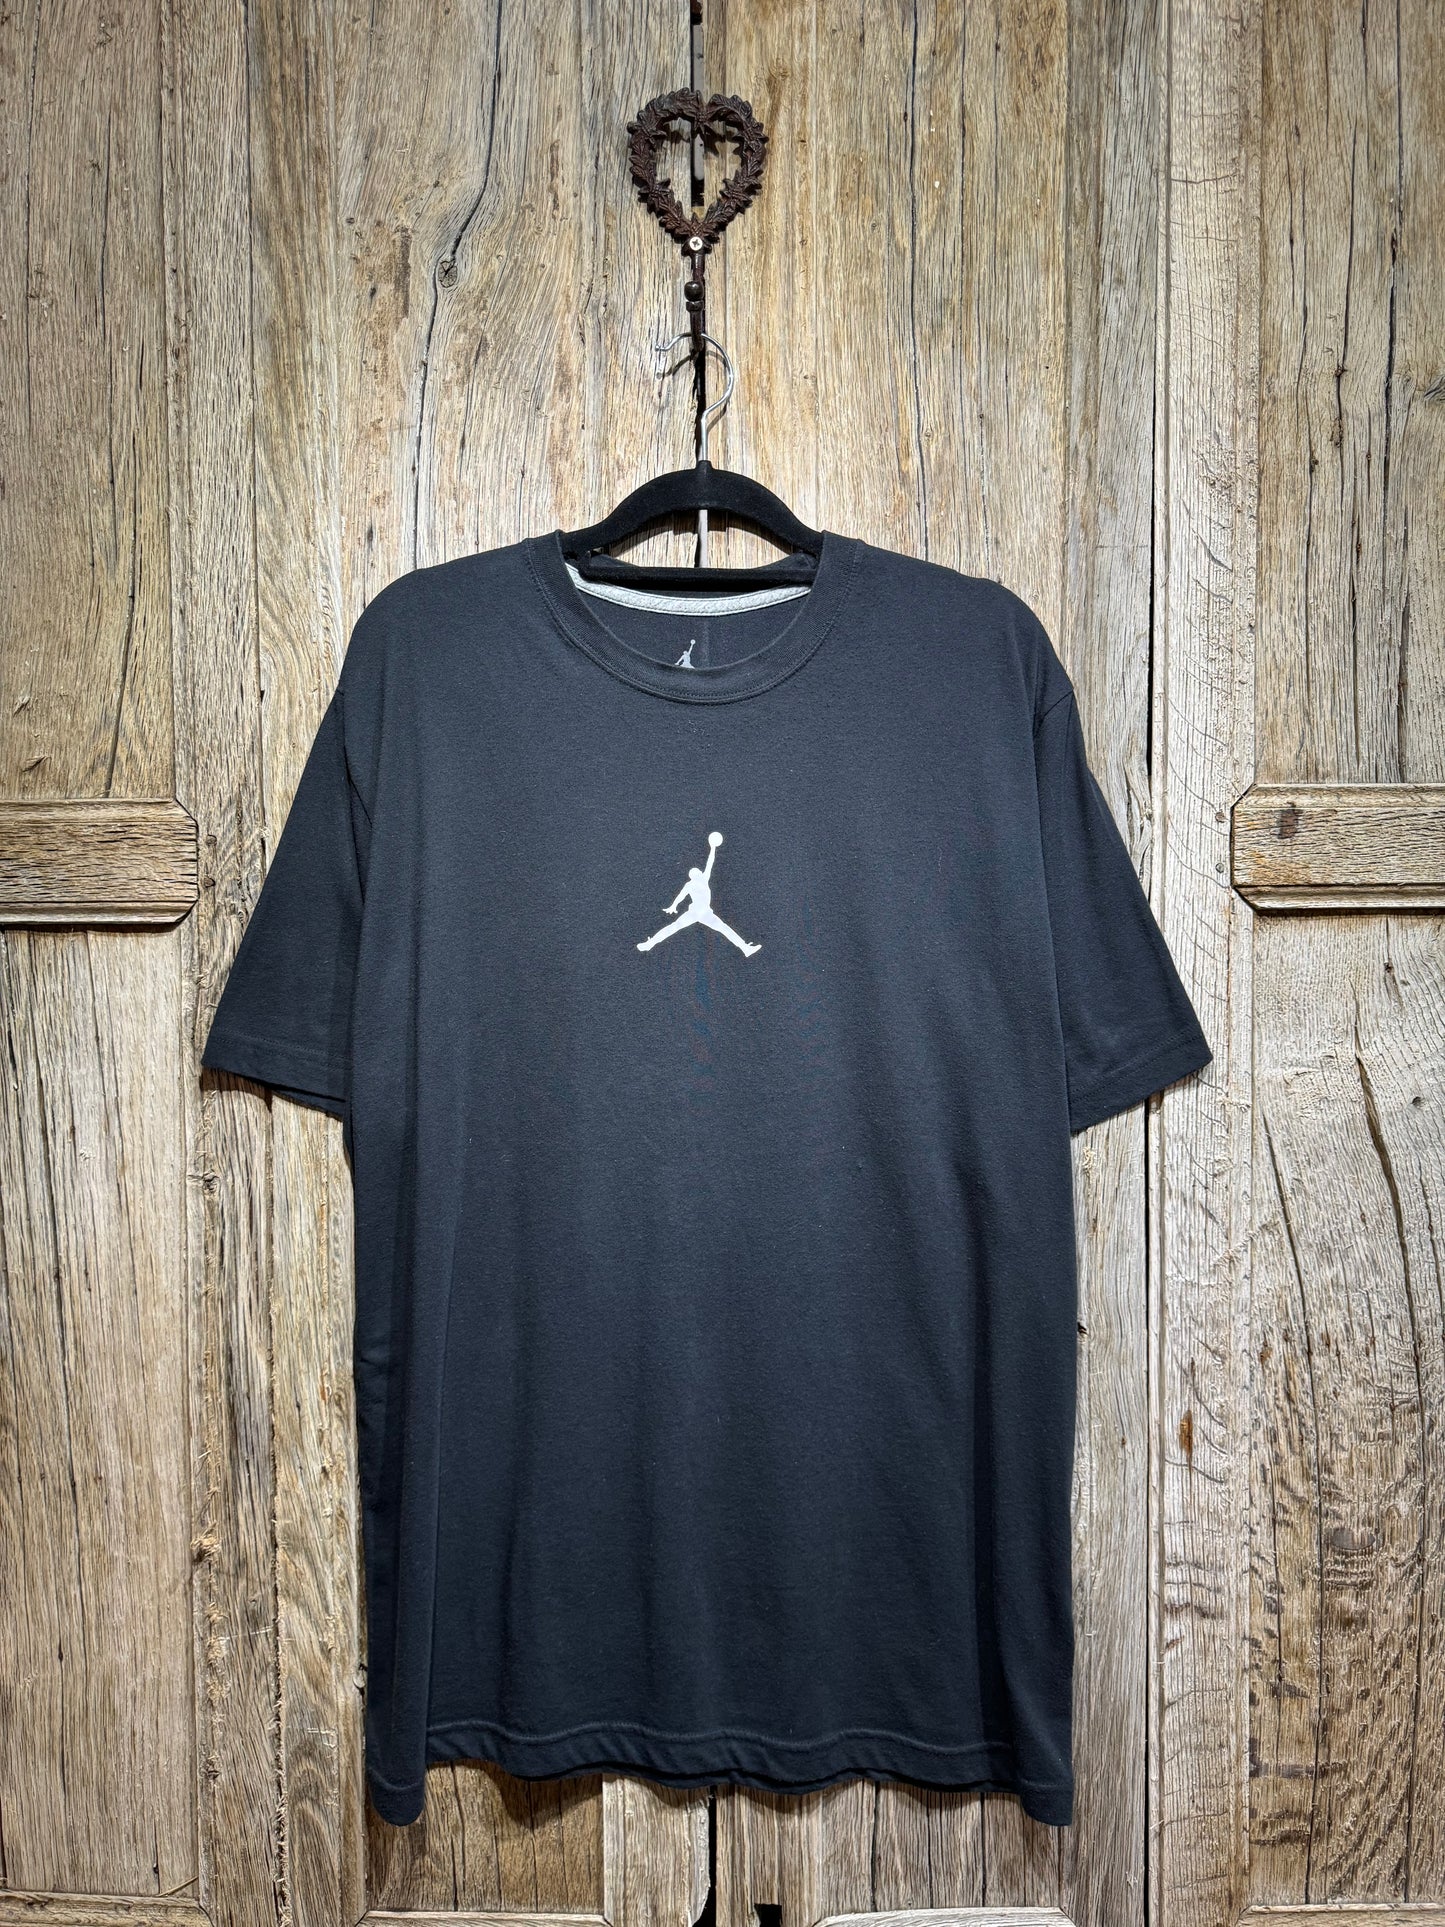 Vintage Jordan Black Jumpman Logo Tee